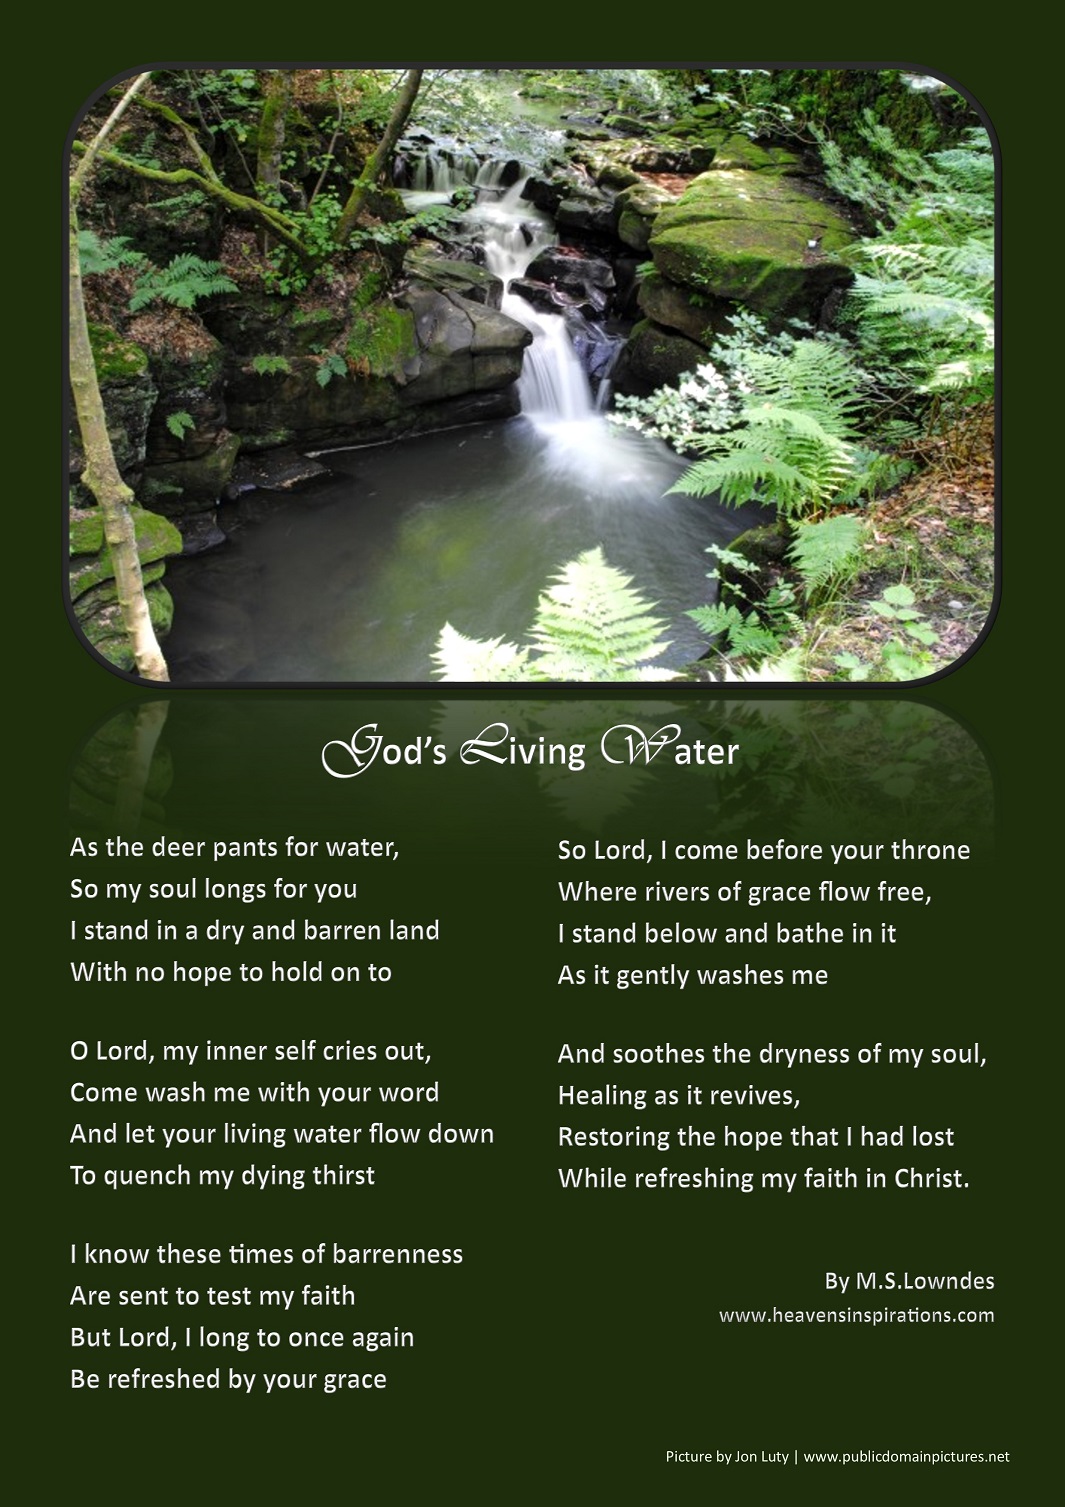 God's Living Water Poem